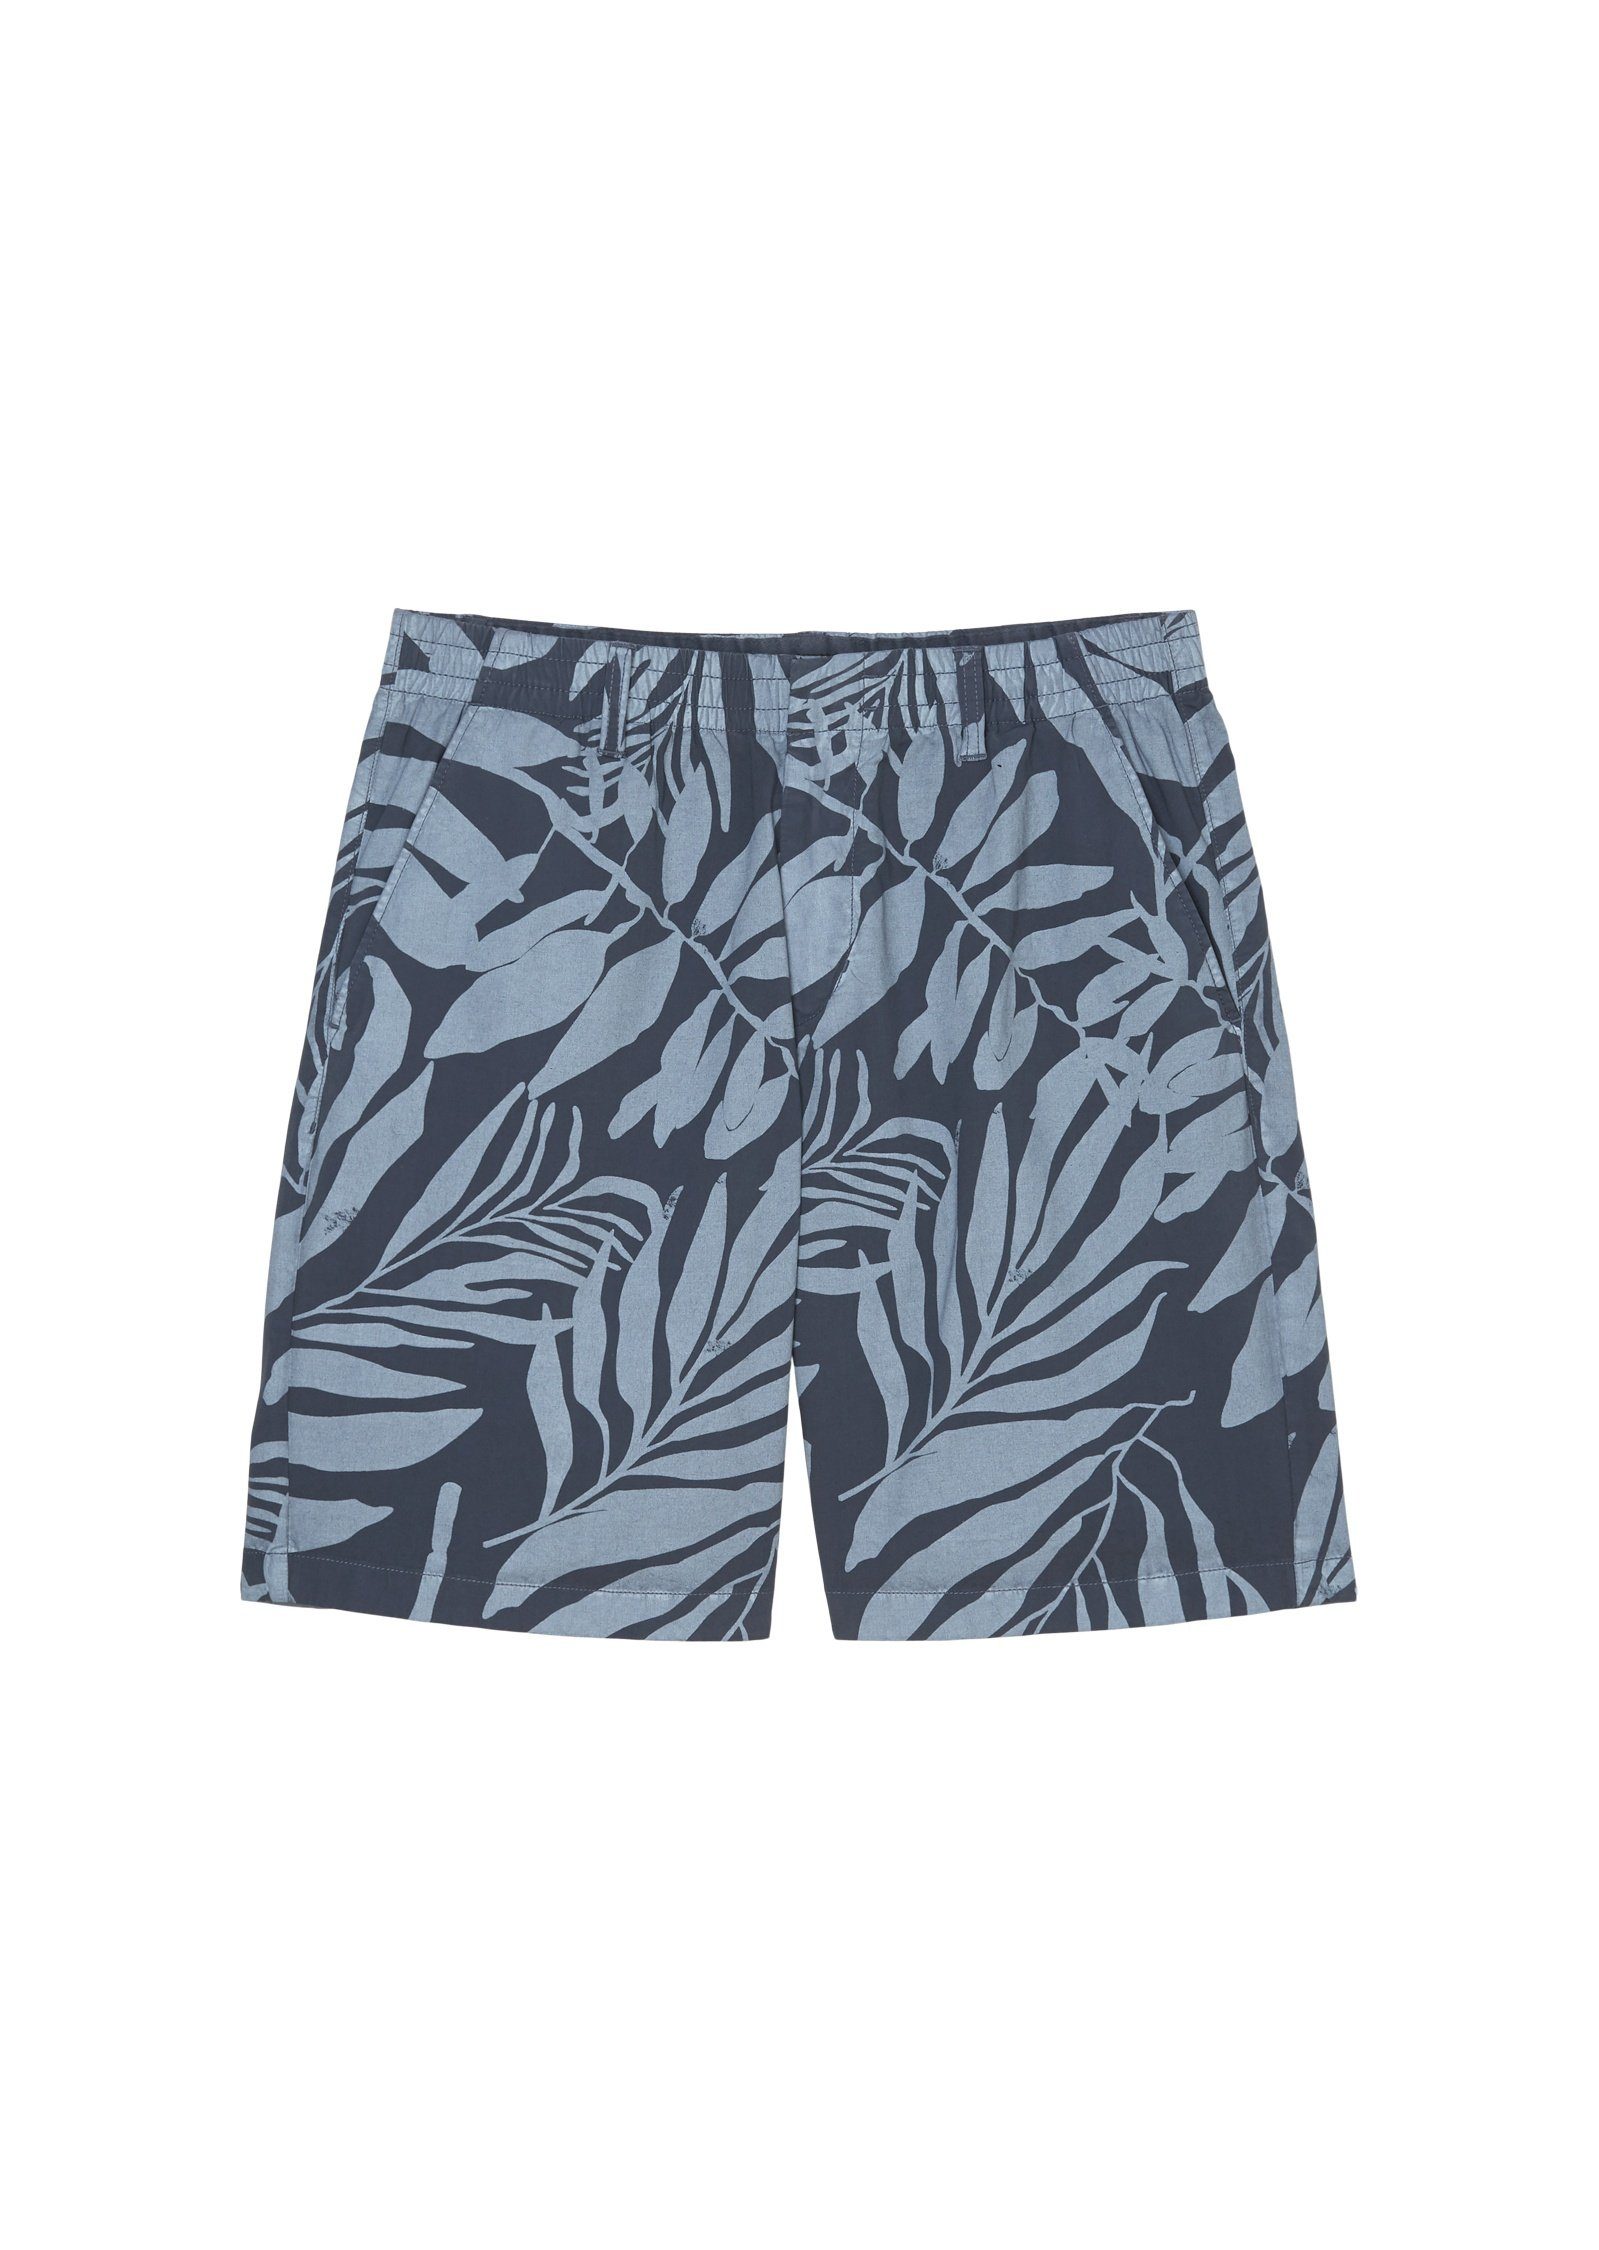 Marc O'Polo mit Blätter-Allover-Print blau Shorts